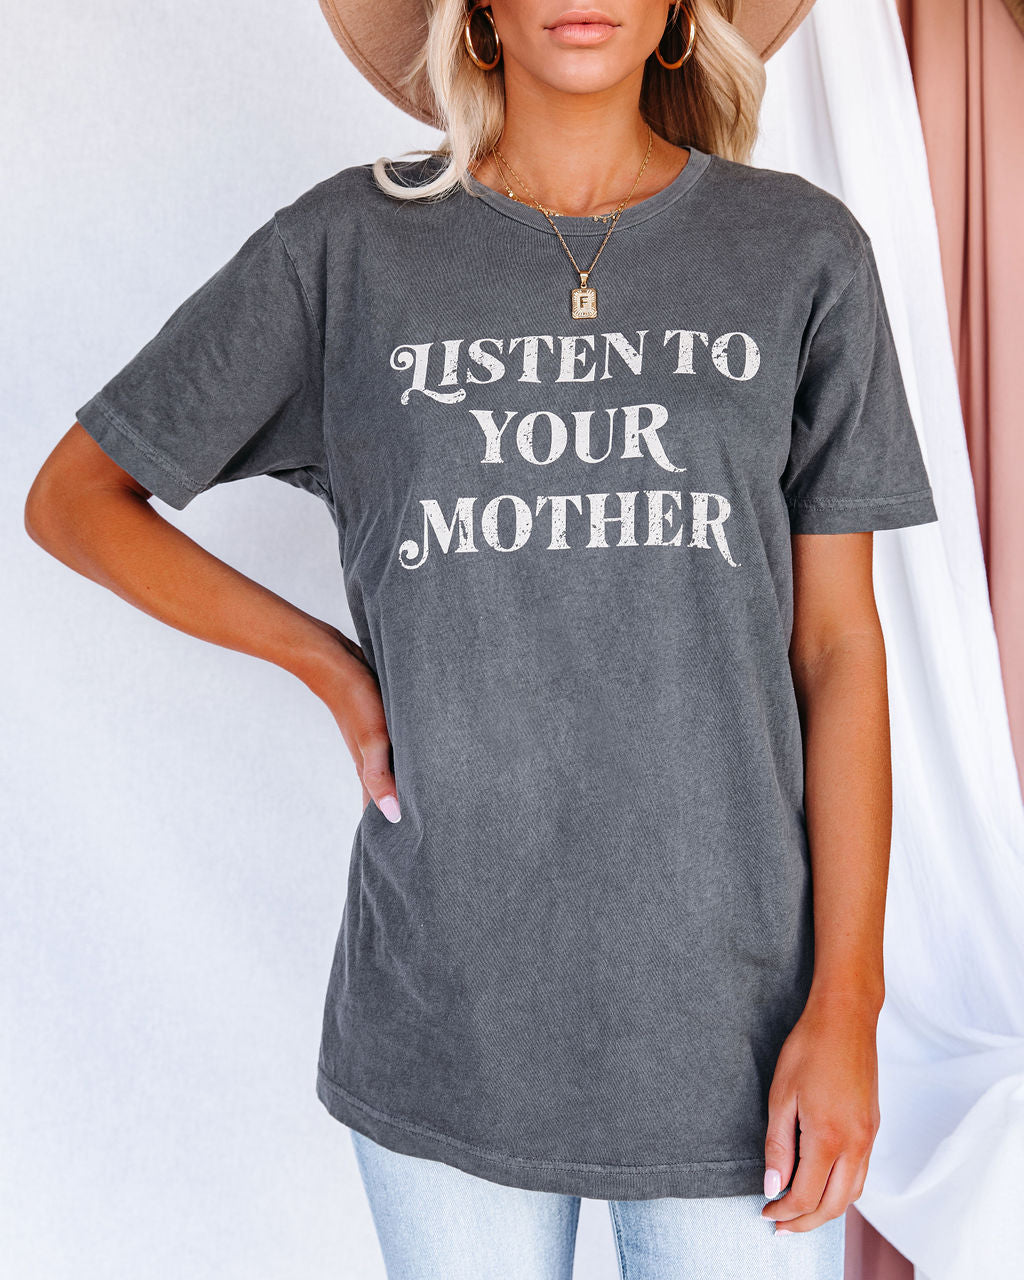 Listen To Your Mother Cotton Tee Oshnow